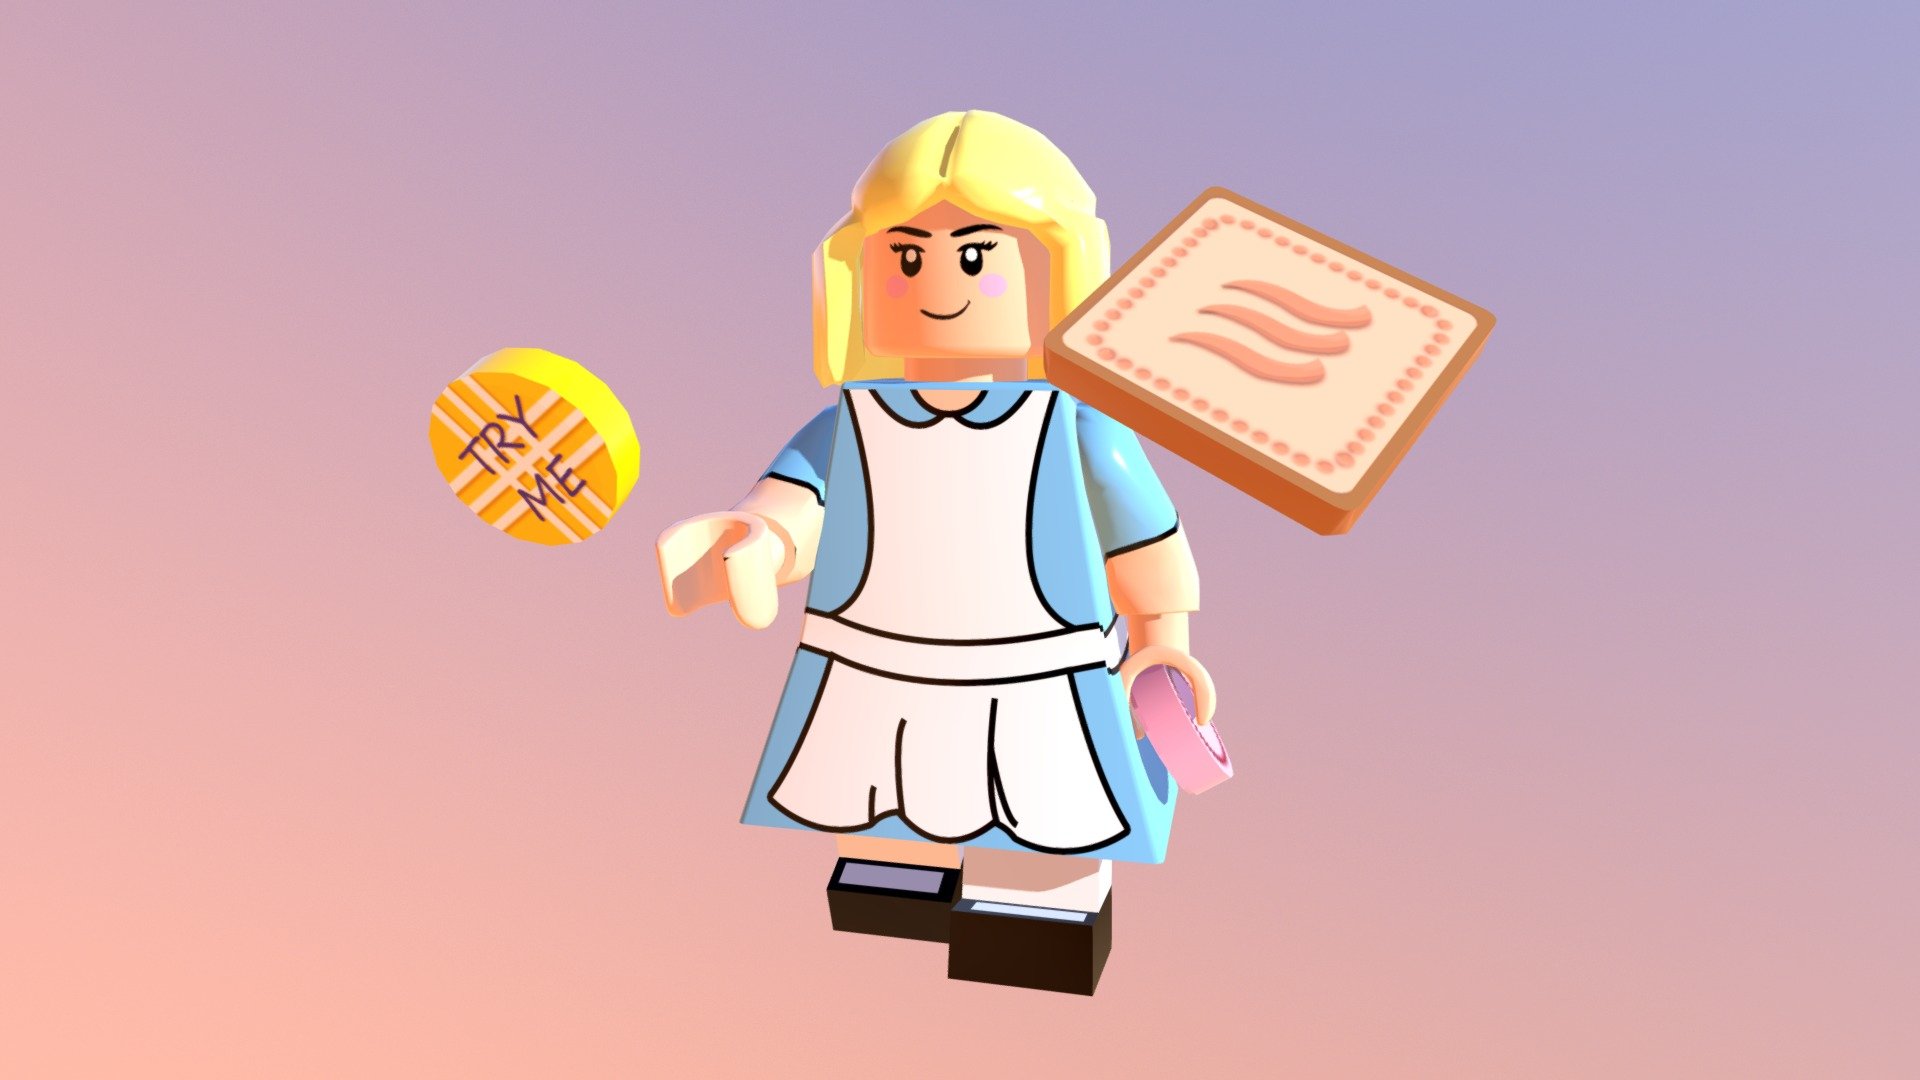 Alice LEGO Model